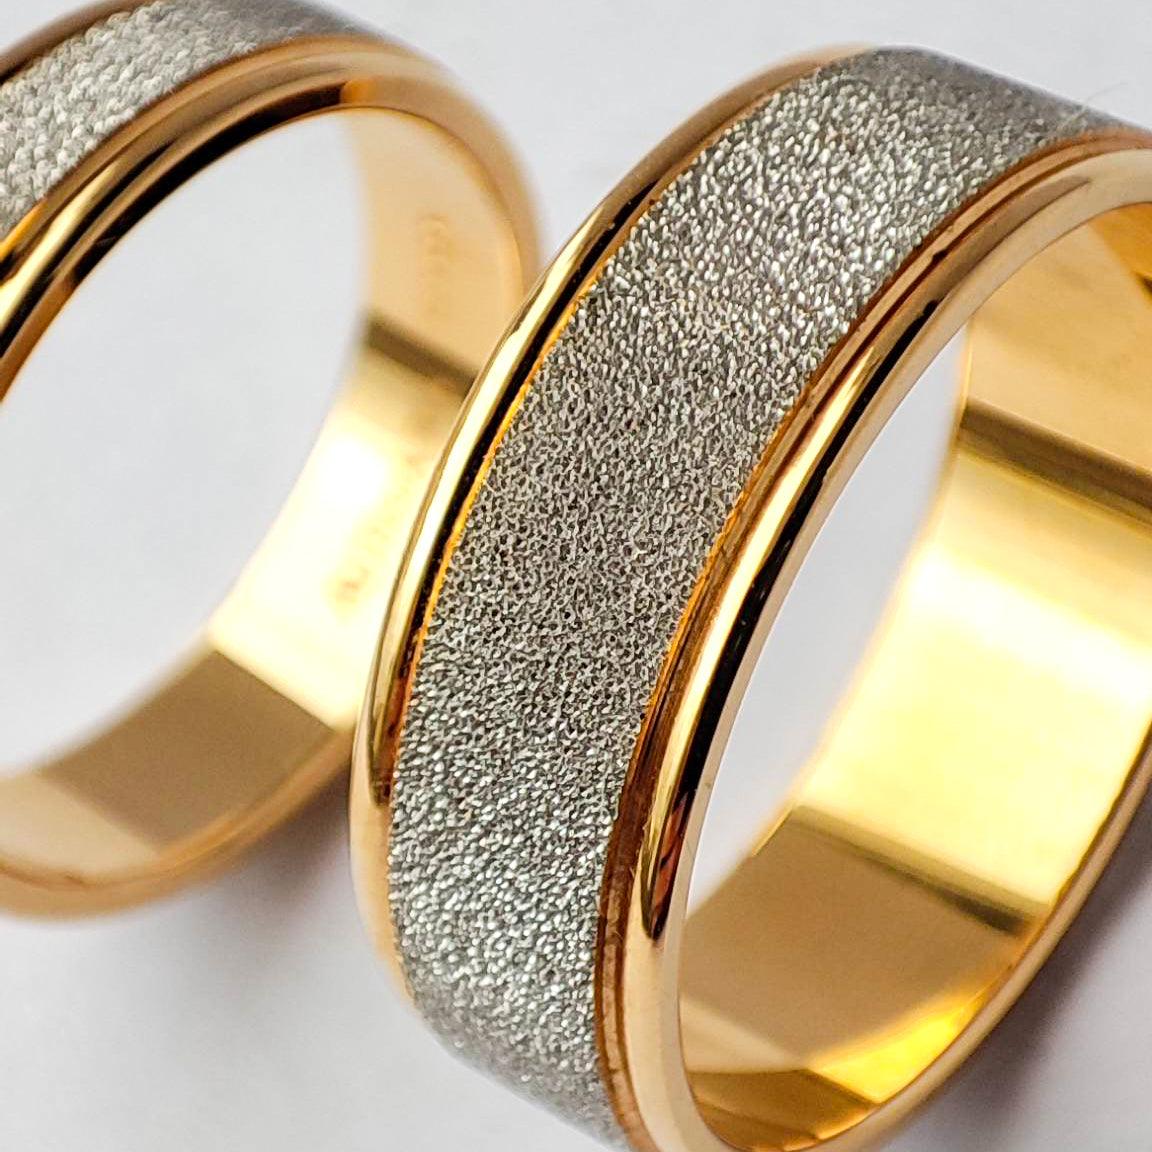 22ct Gold Wedding Band with Rhodium Sand Finish LR/GR-8218 - Minar Jewellers